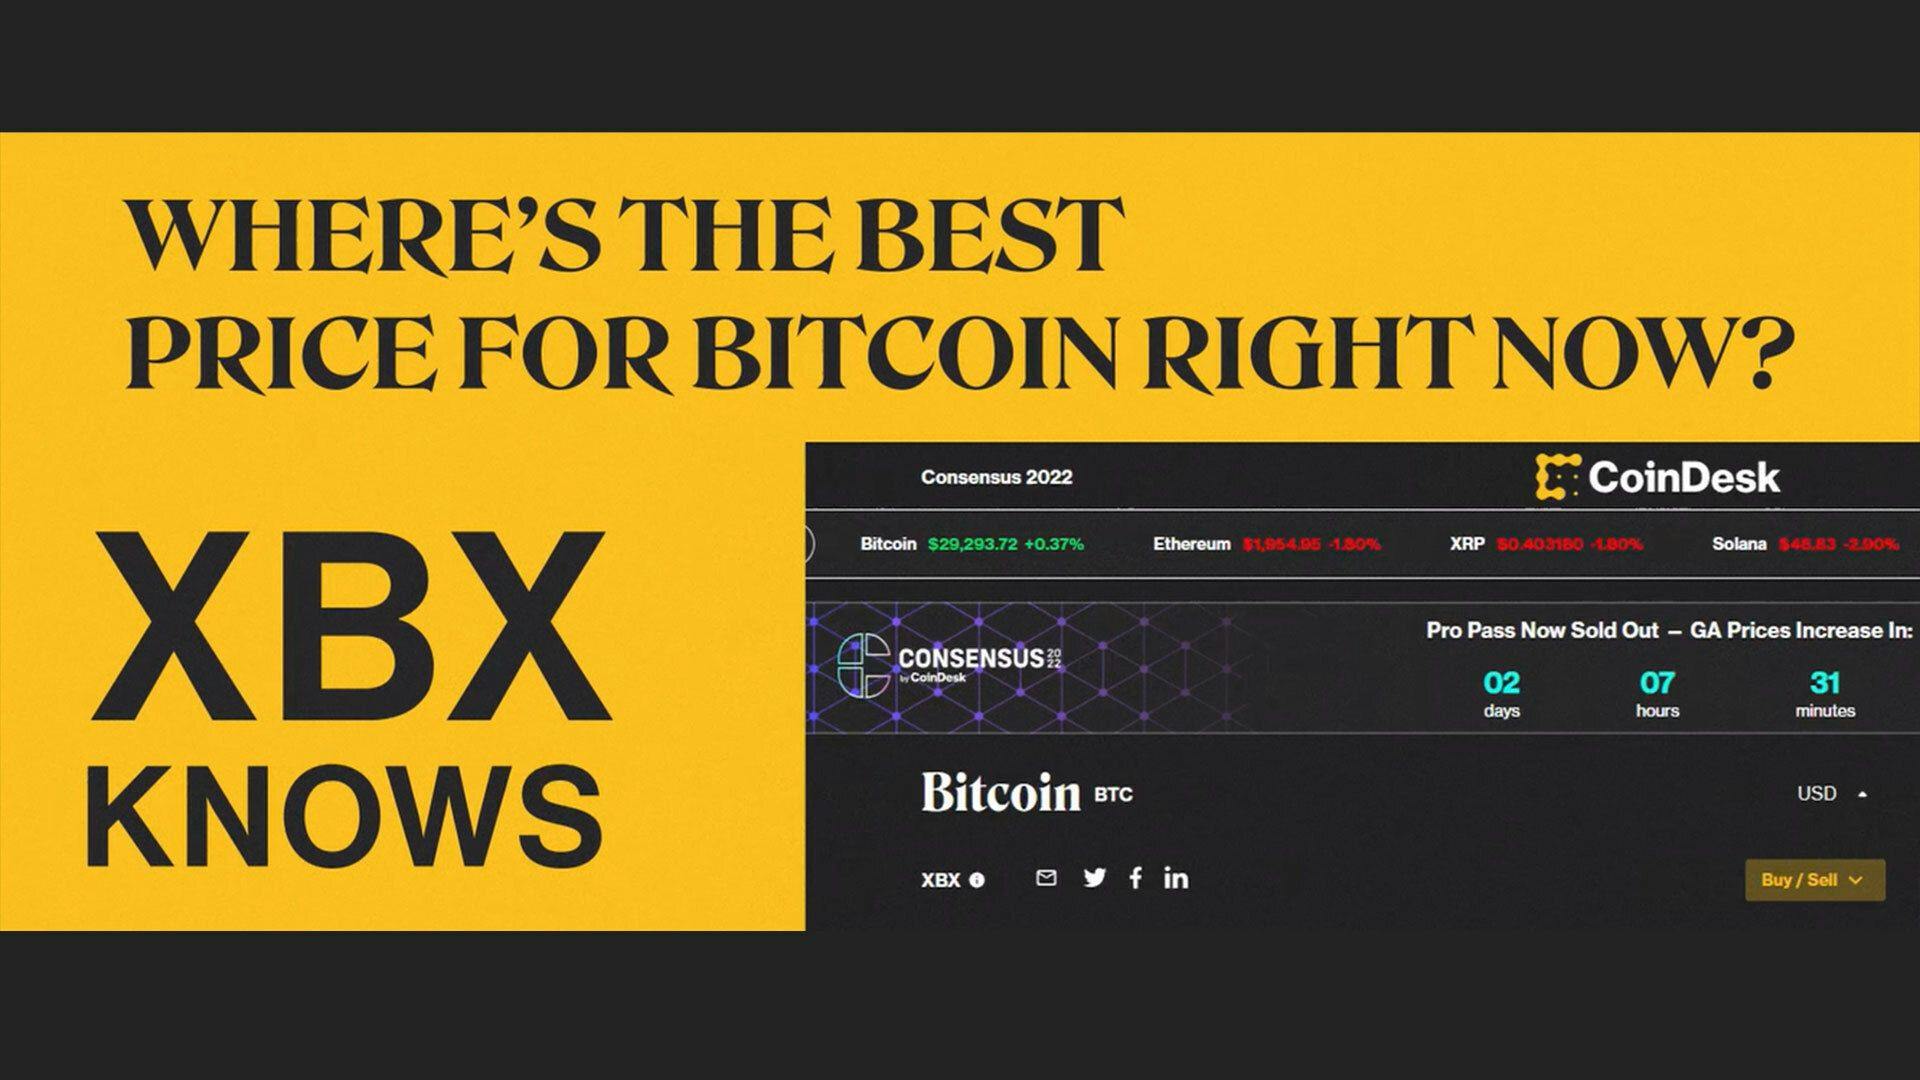 XBX: The Bitcoin Price Index image